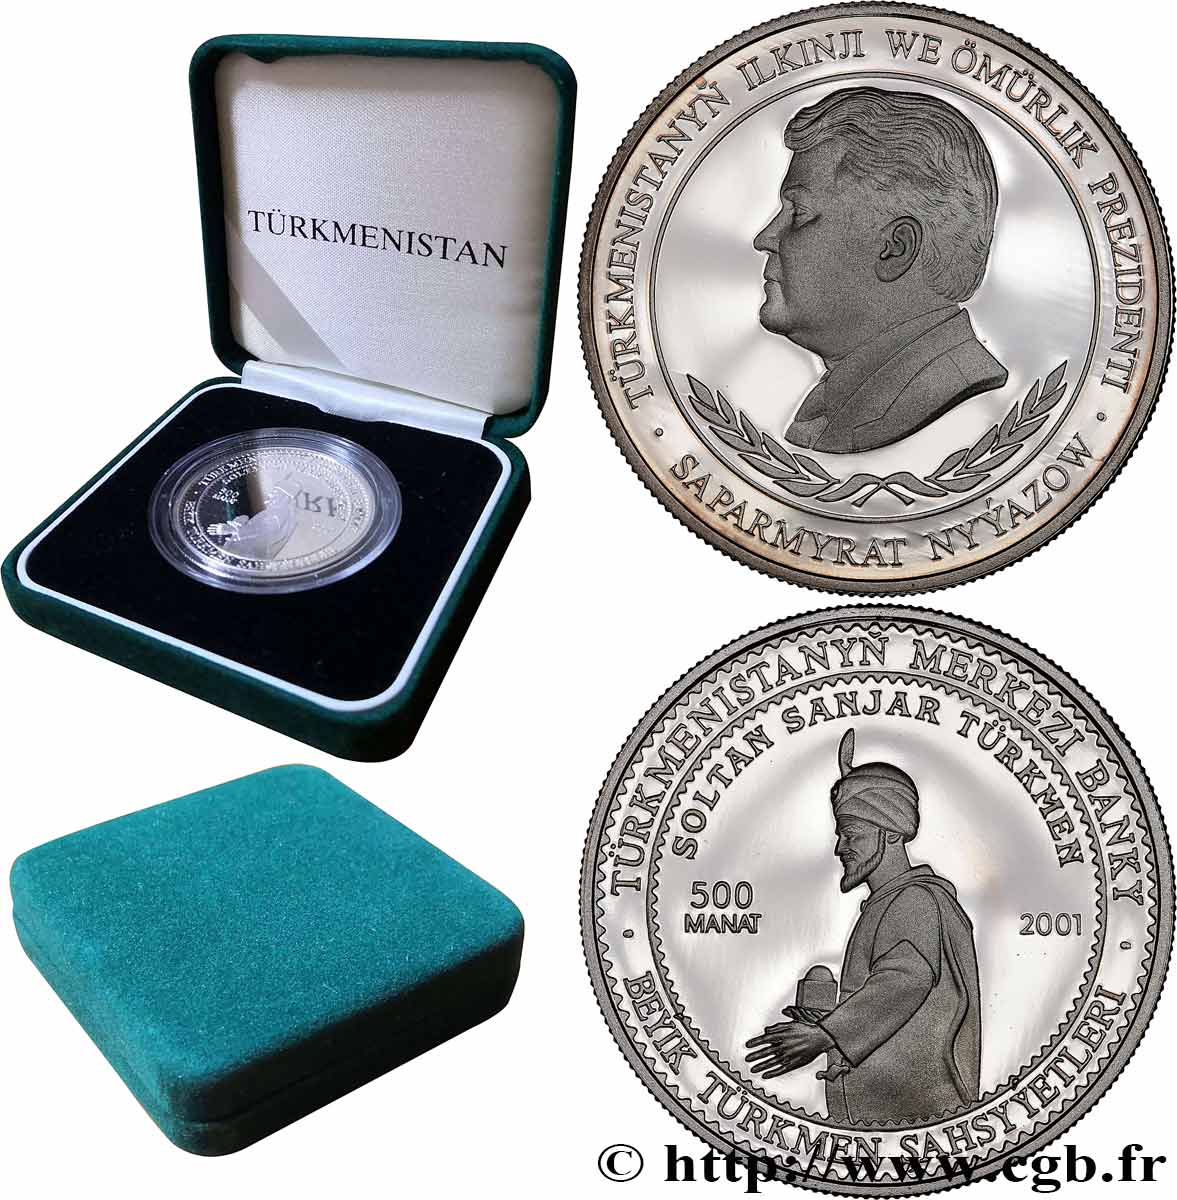 TURKMENISTáN 500 Manat Proof Soltan Sawjar 2001 British Royal Mint FDC 